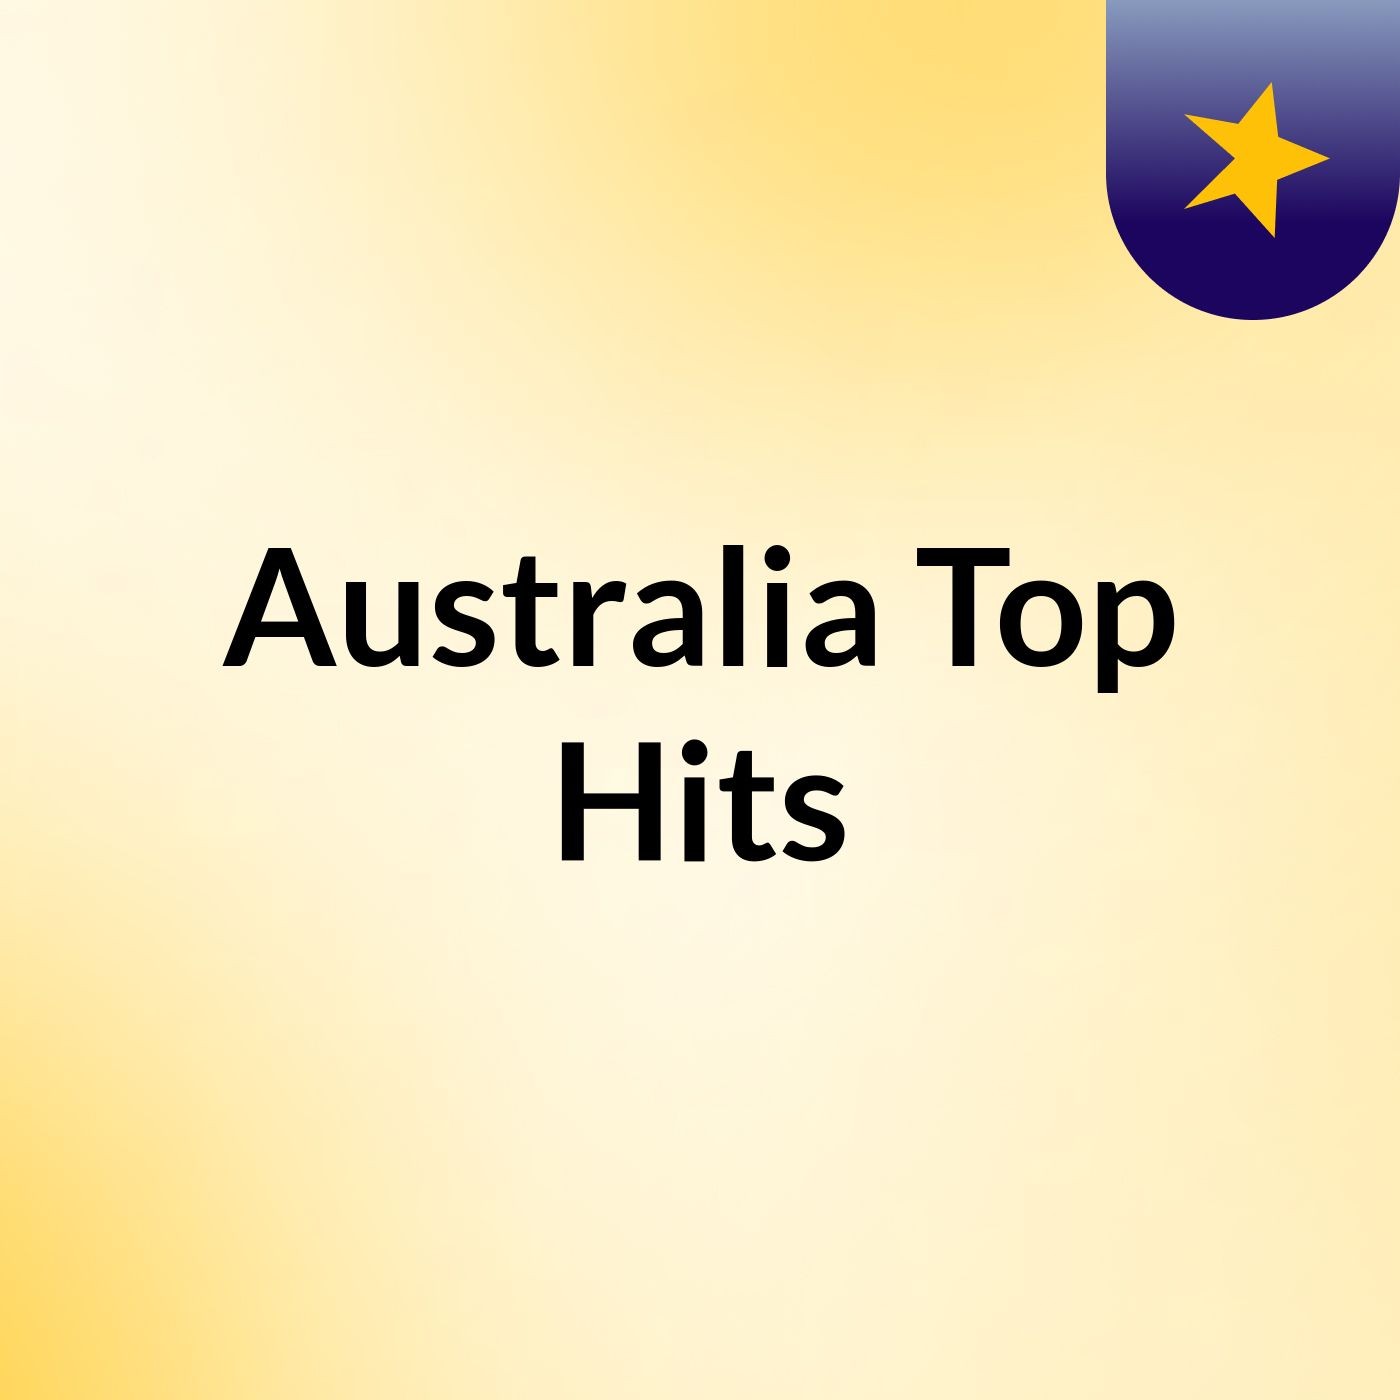 Australia Top Hits